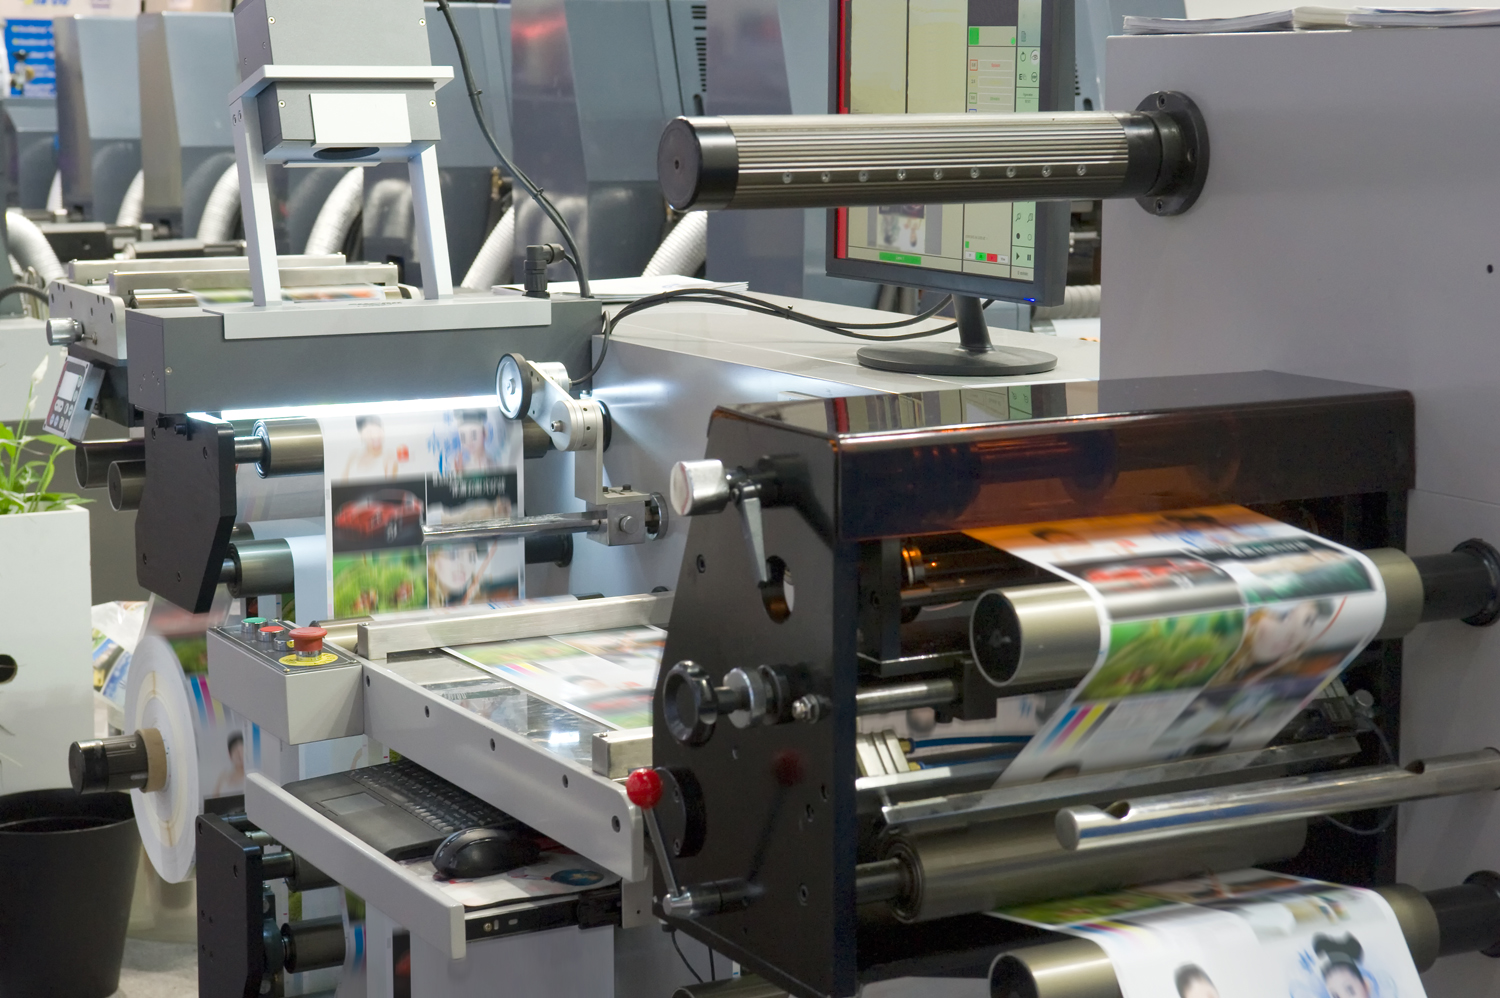 Rollenoffset
Printing machine